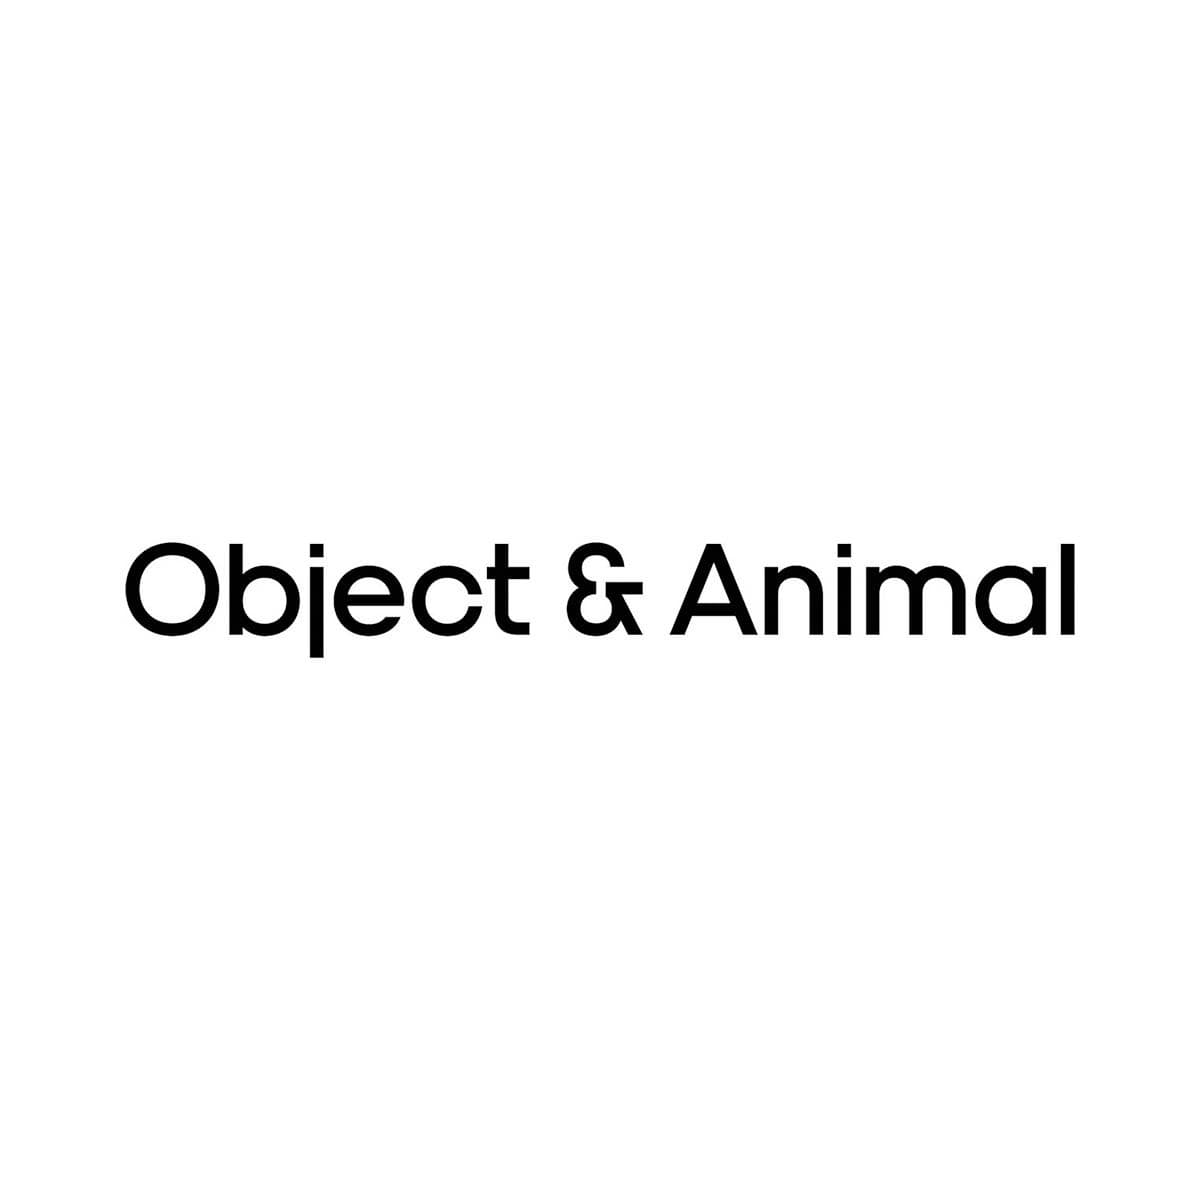 Object & Animal logo